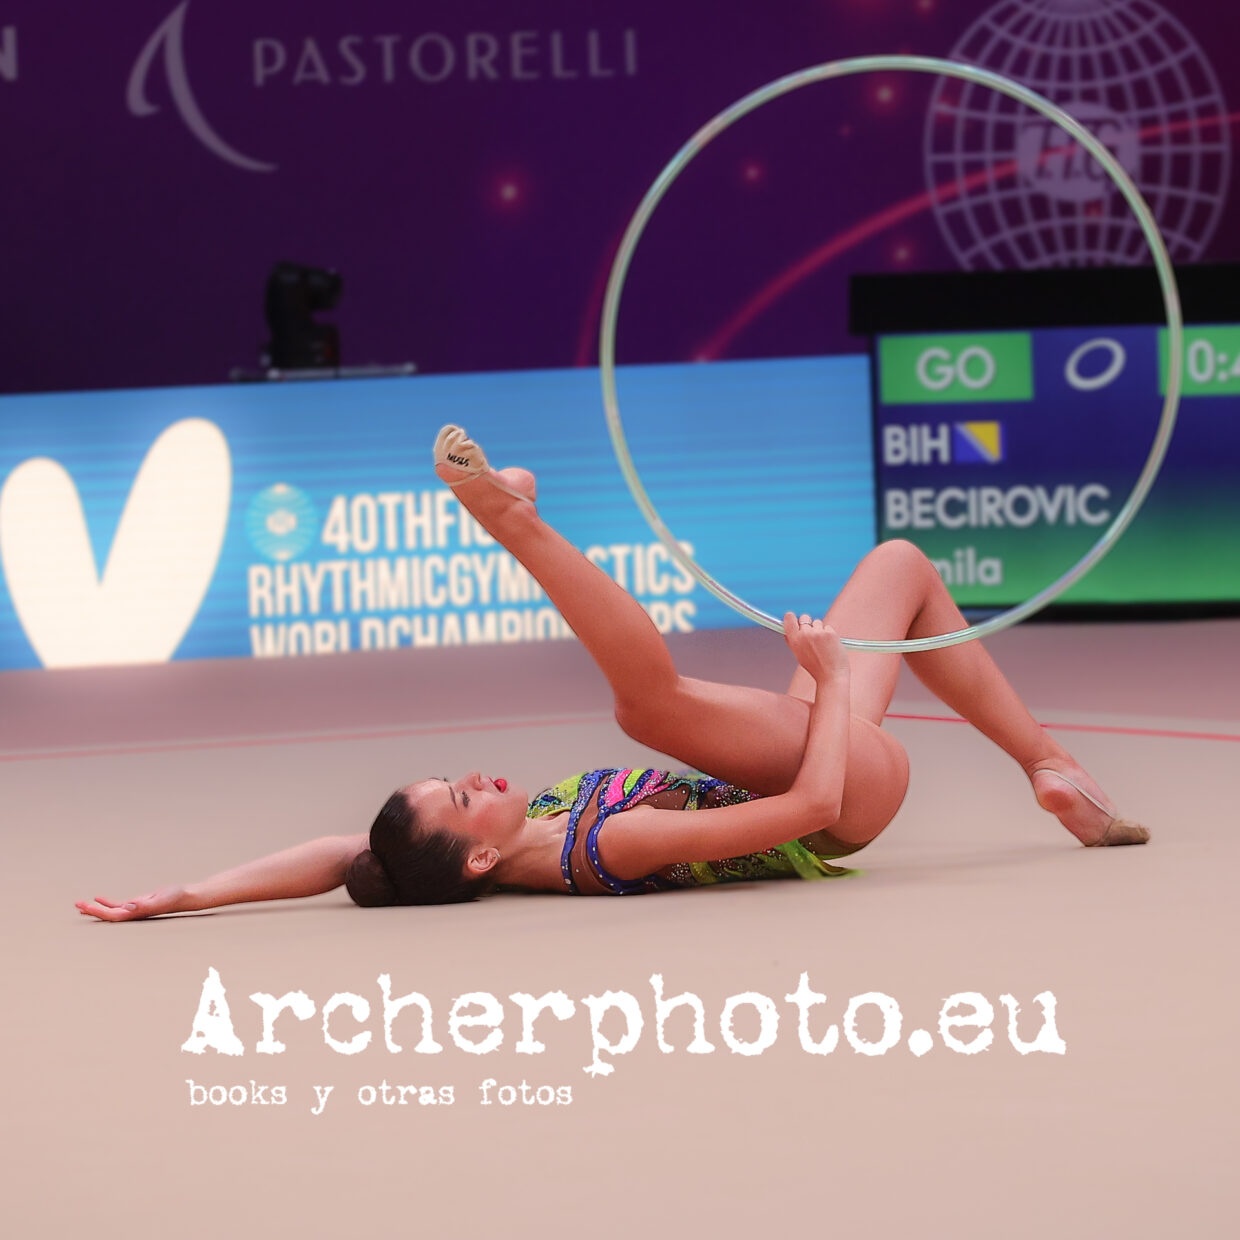 Amila Becirovic (1), 40th FIG Rhythmic Gymnastics World Championships Valencia 2023, hoop, pic by Archerphoto, photographer in Spain